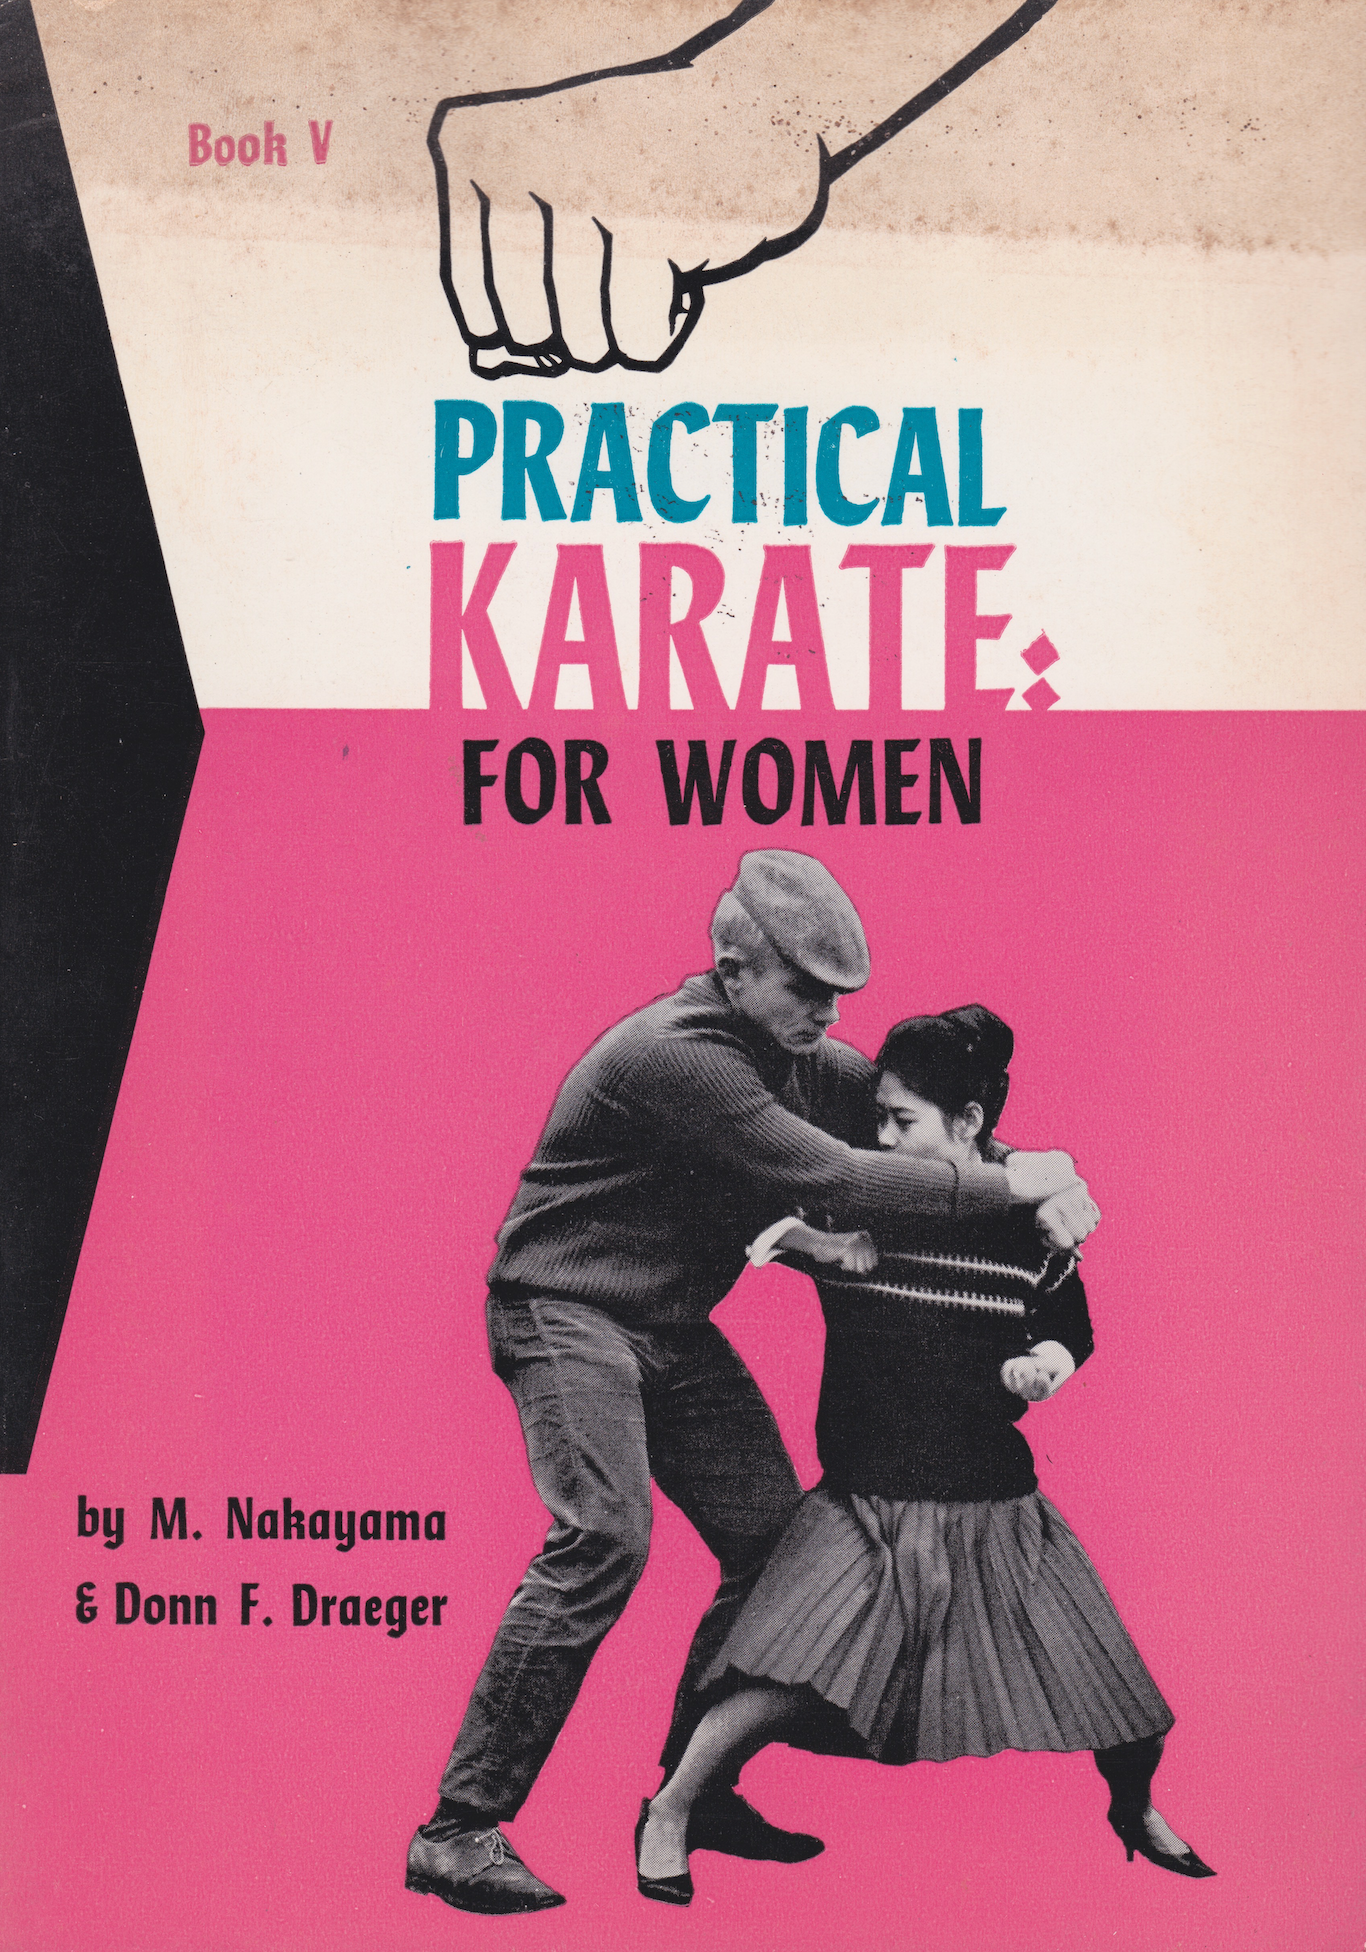 Practical Karate Book 5: Karate for Women by Masatoshi Nakayama & Donn Draeger (Preowned)